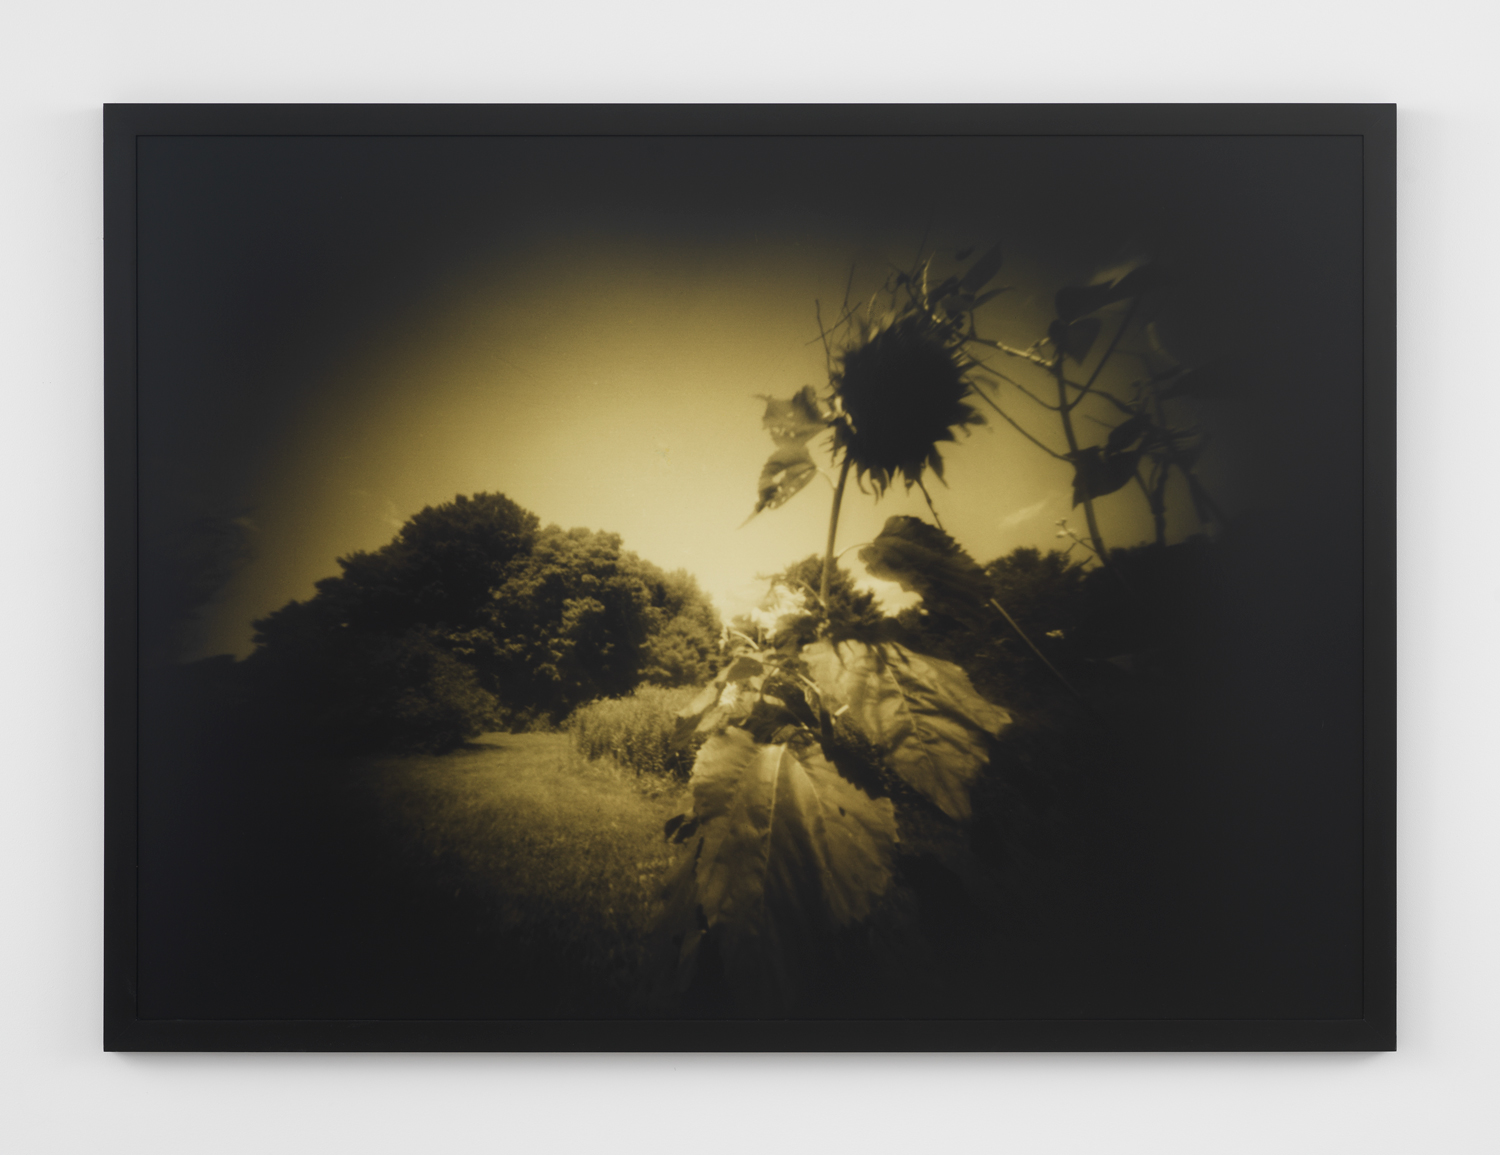 Barbara Ess, No Title (Sunflower),1997-98, C-Print, 51 5/8 x 68 7/8 x 1 3/4 in.